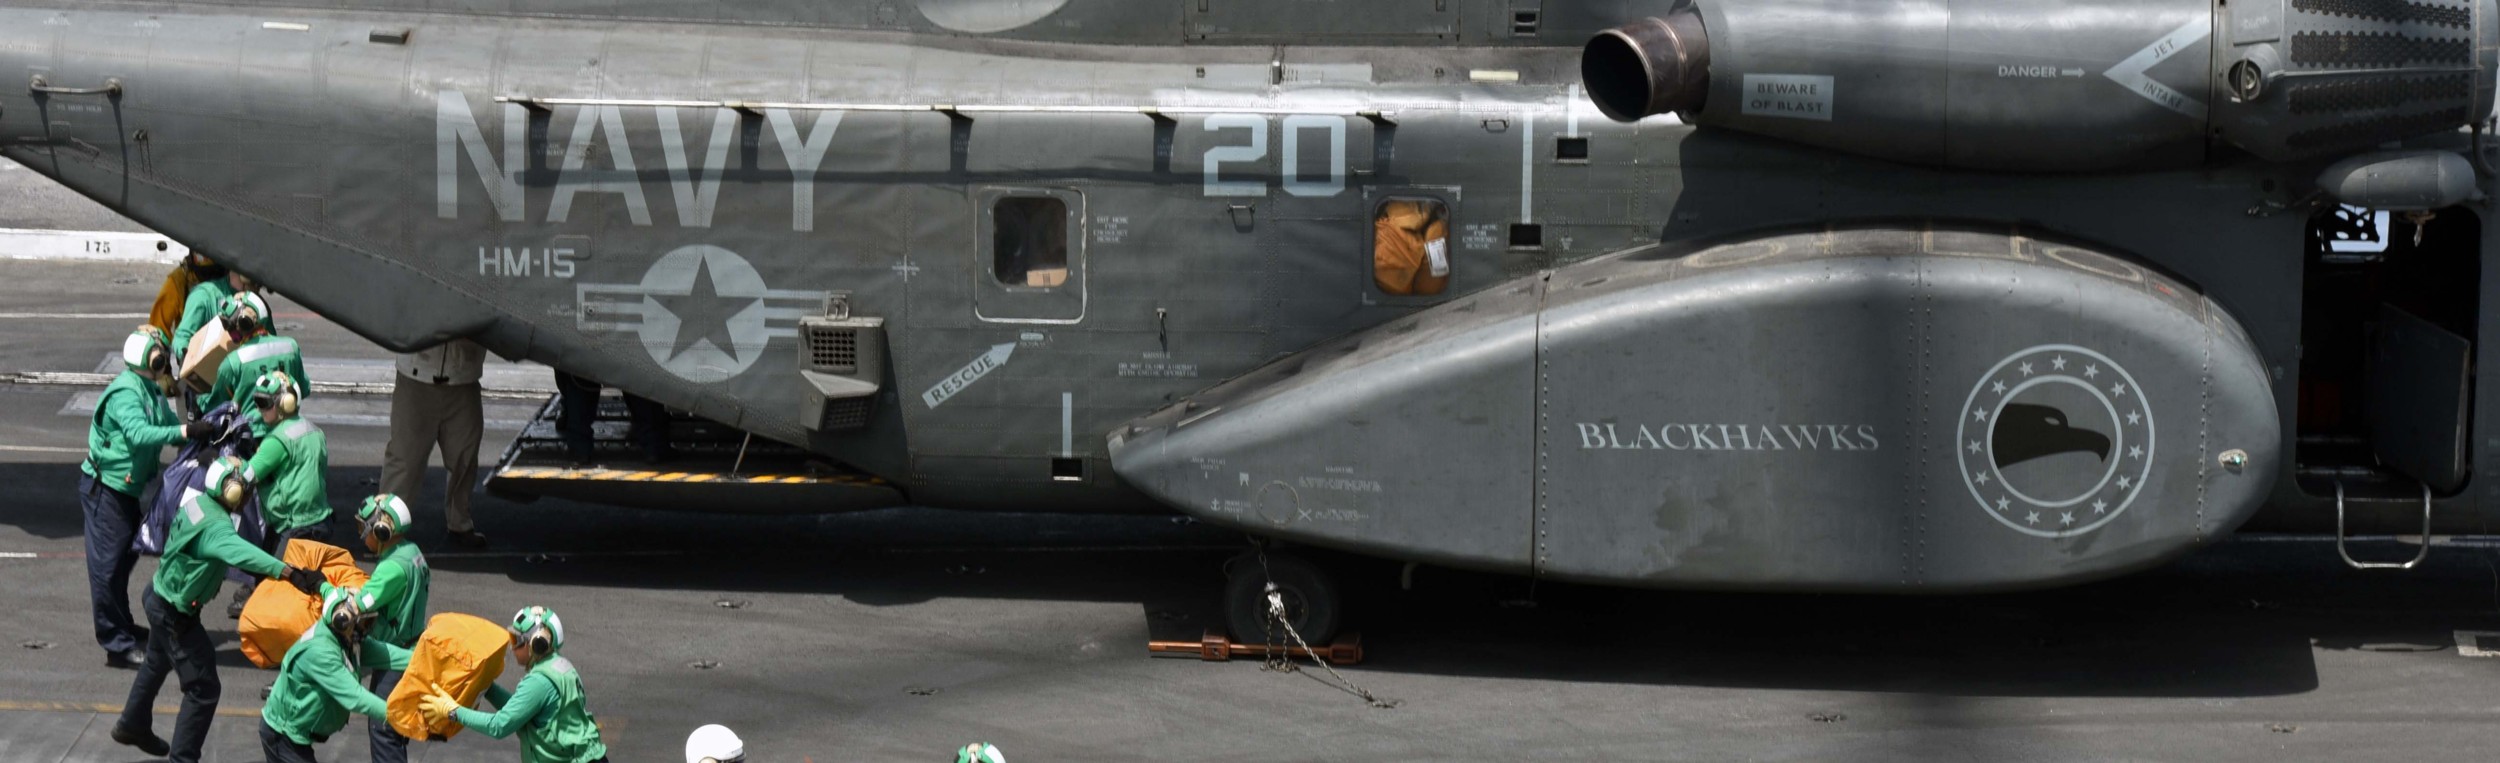 hm-15 blackhawks helicopter mine countermeasures squadron navy mh-53e sea dragon 27